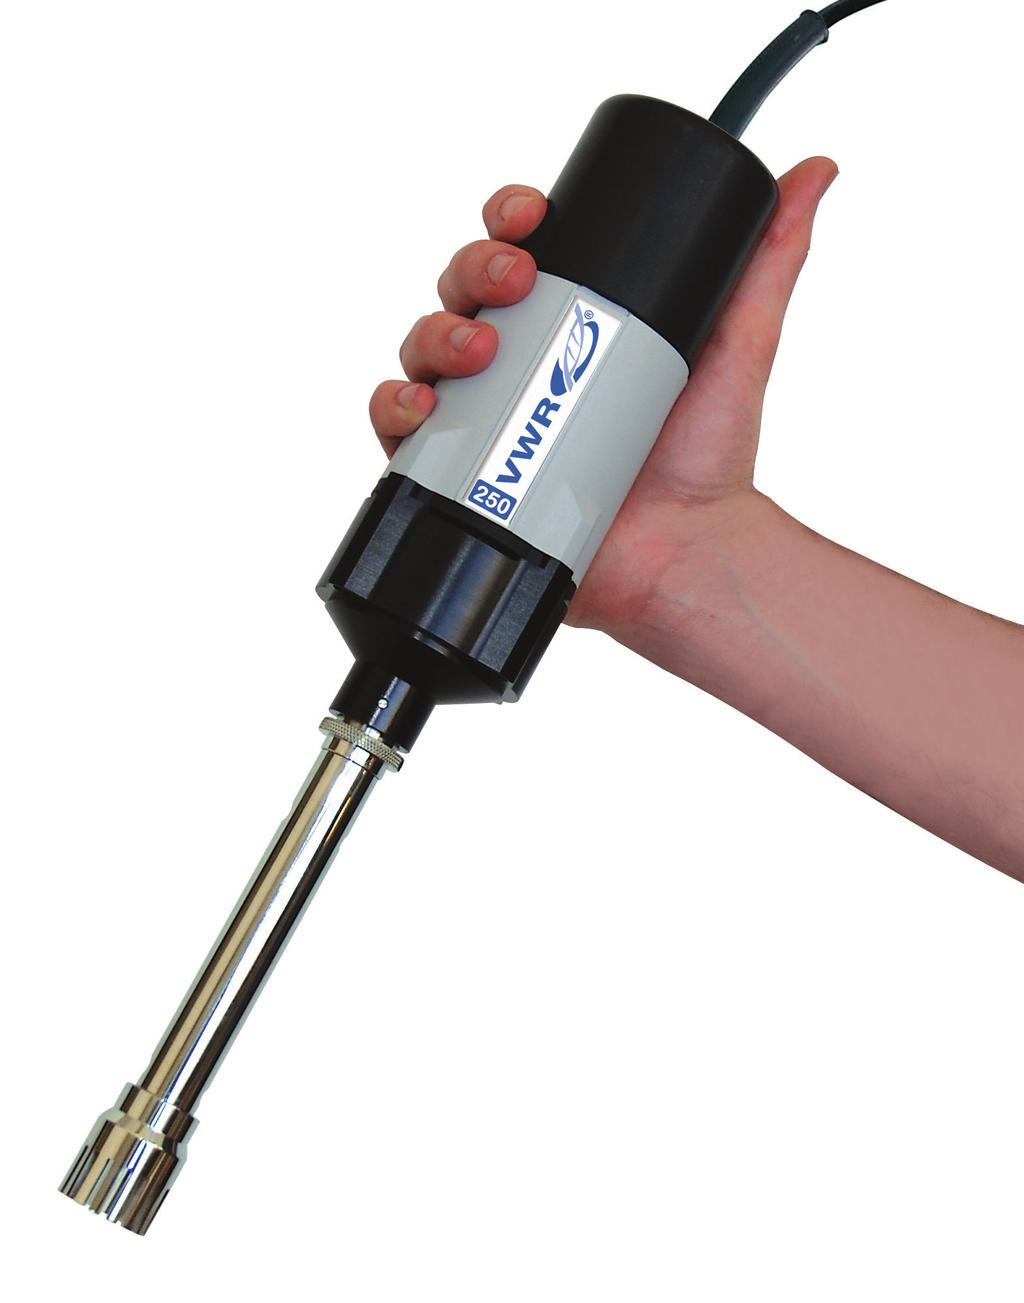 VWR 250 Homogenizer Versatile Hand-Held Homogenizer Unit Ideal for Processing Volumes from 0.